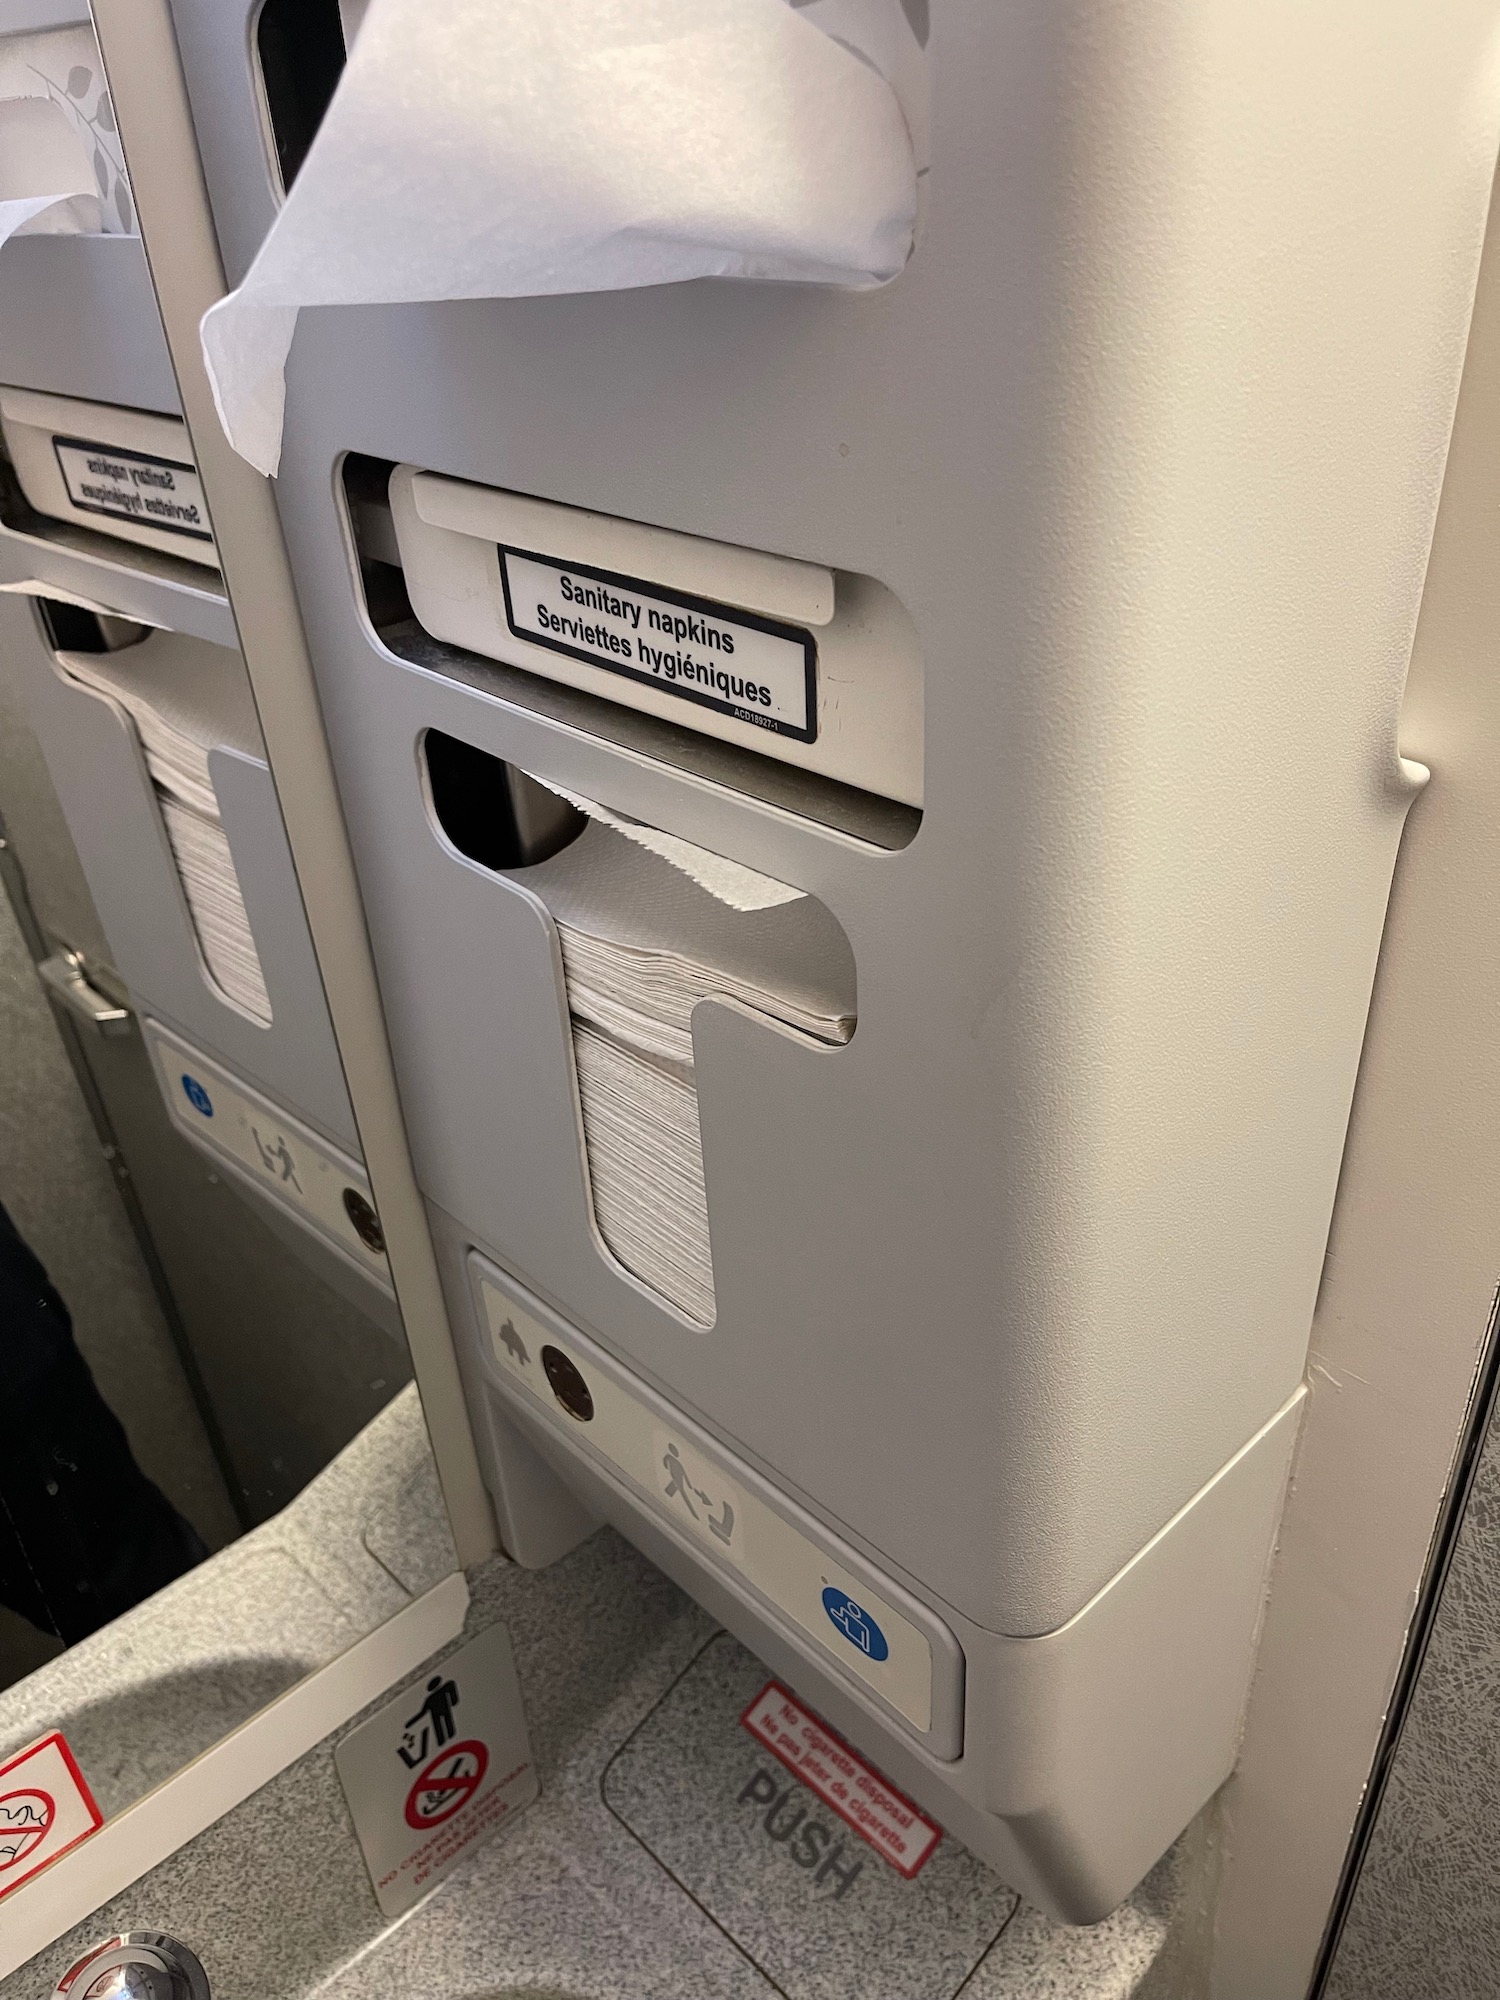 a toilet paper dispenser on a plane